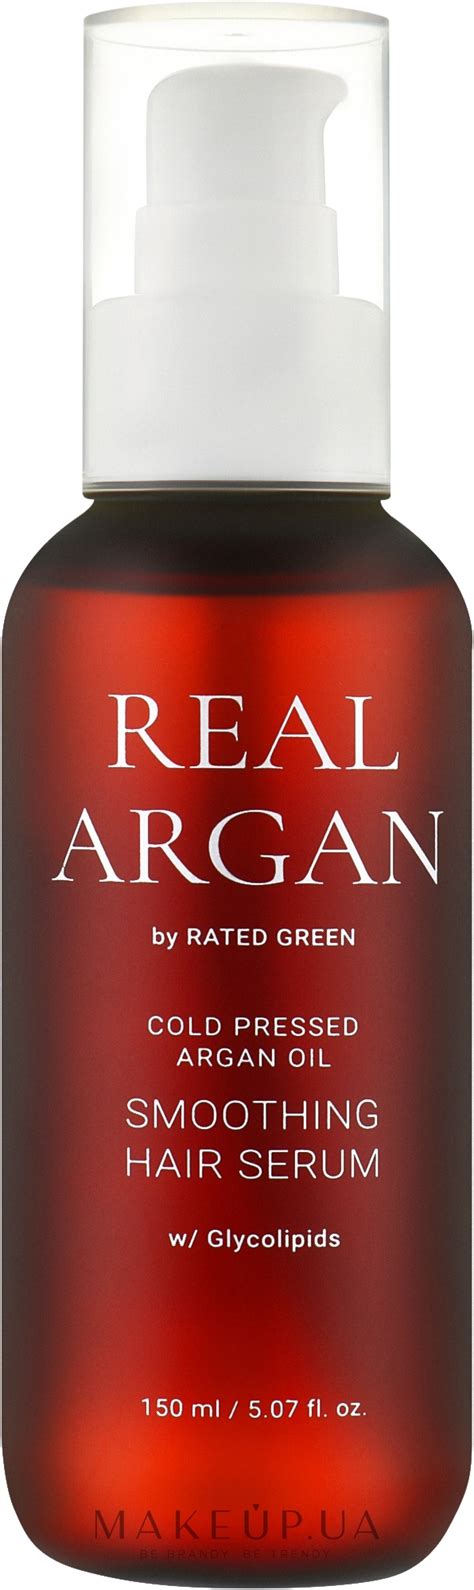 Rated Green Real Argan Smoothing